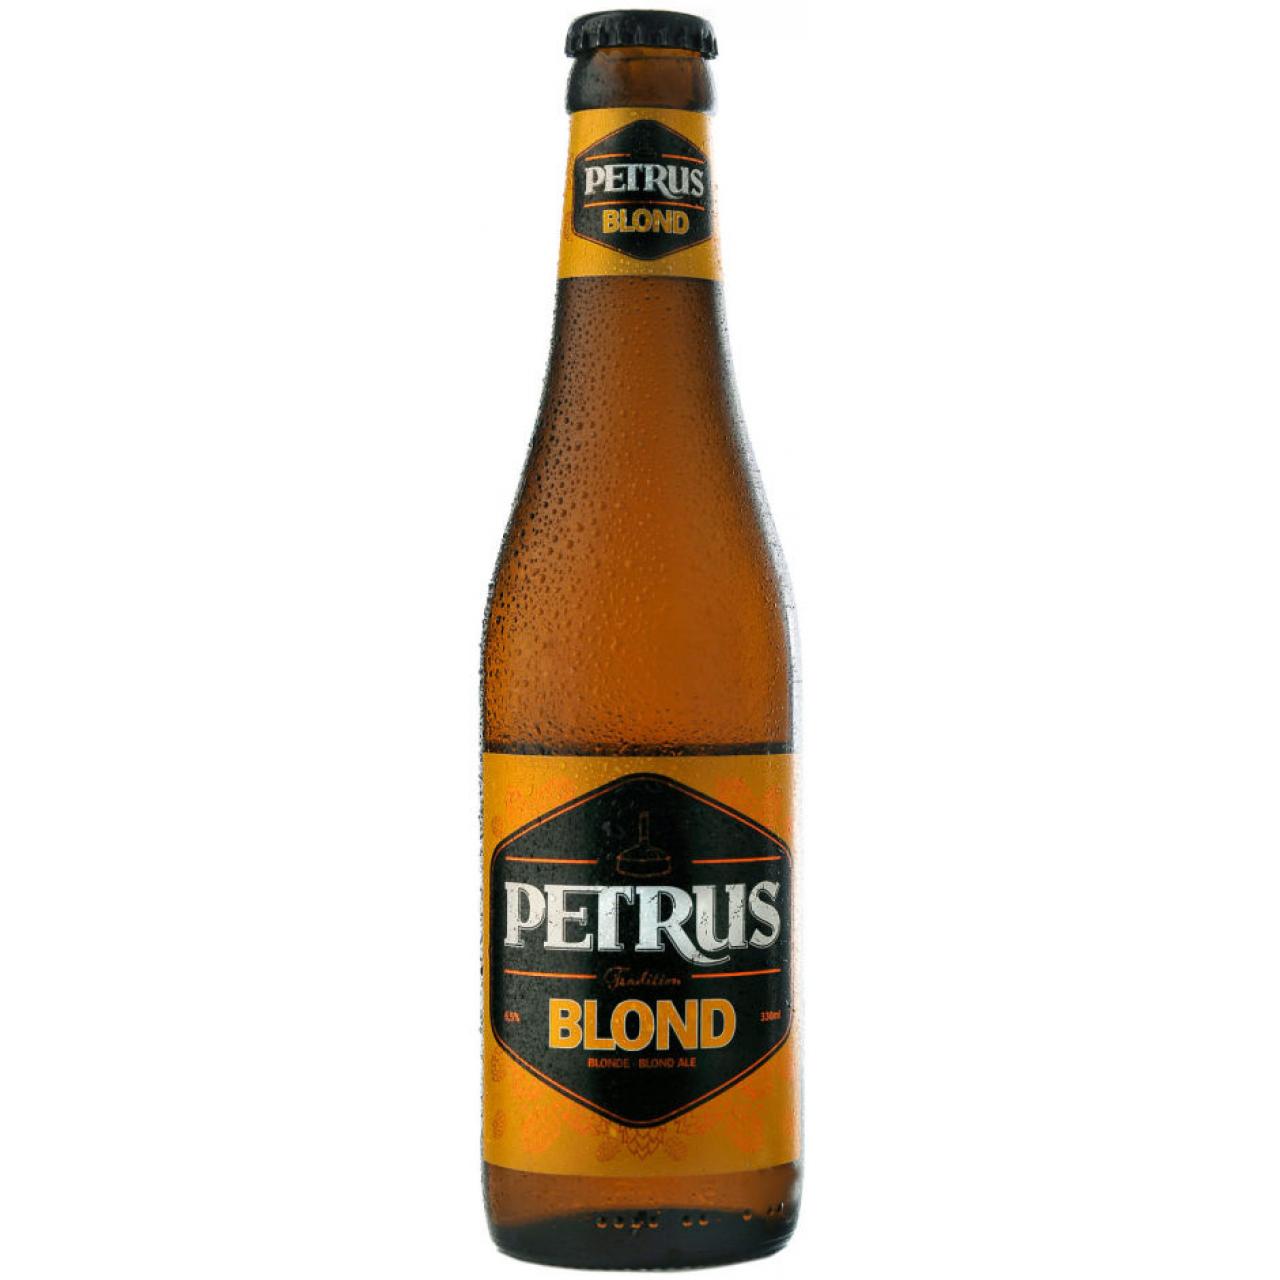 PETRUS BLONDE 6.6% 33CL